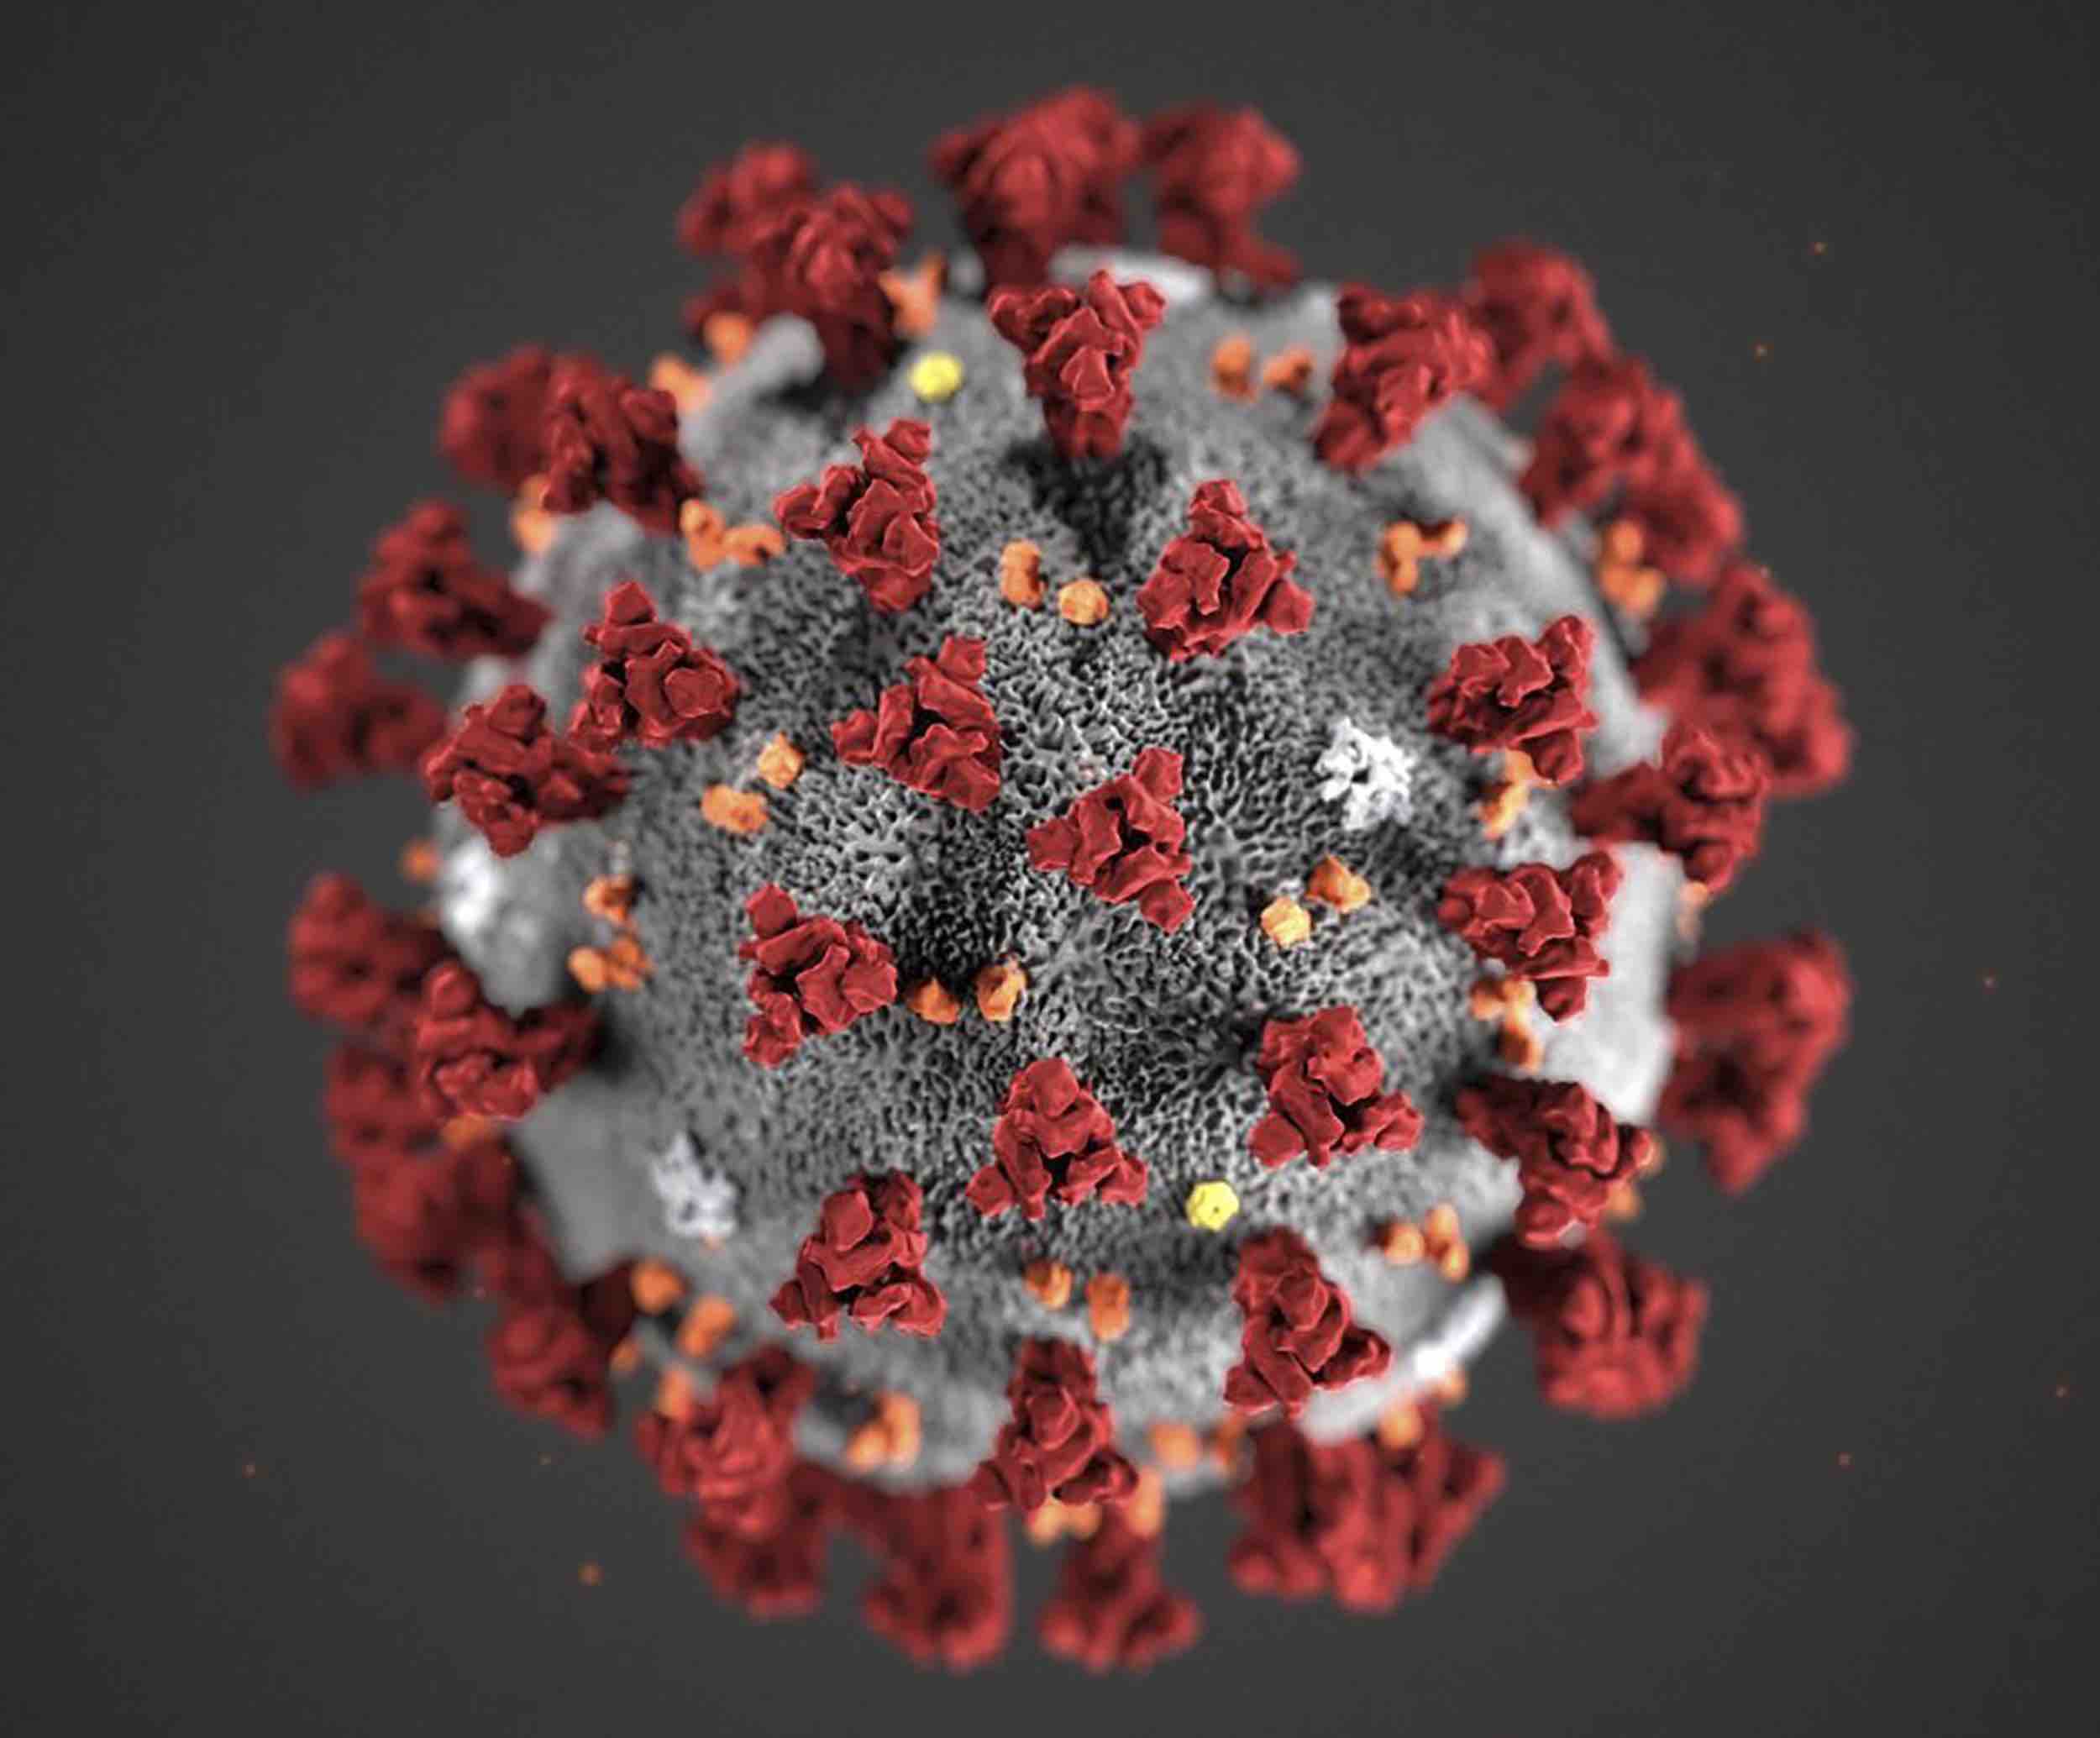 image of corona virus under microscope 